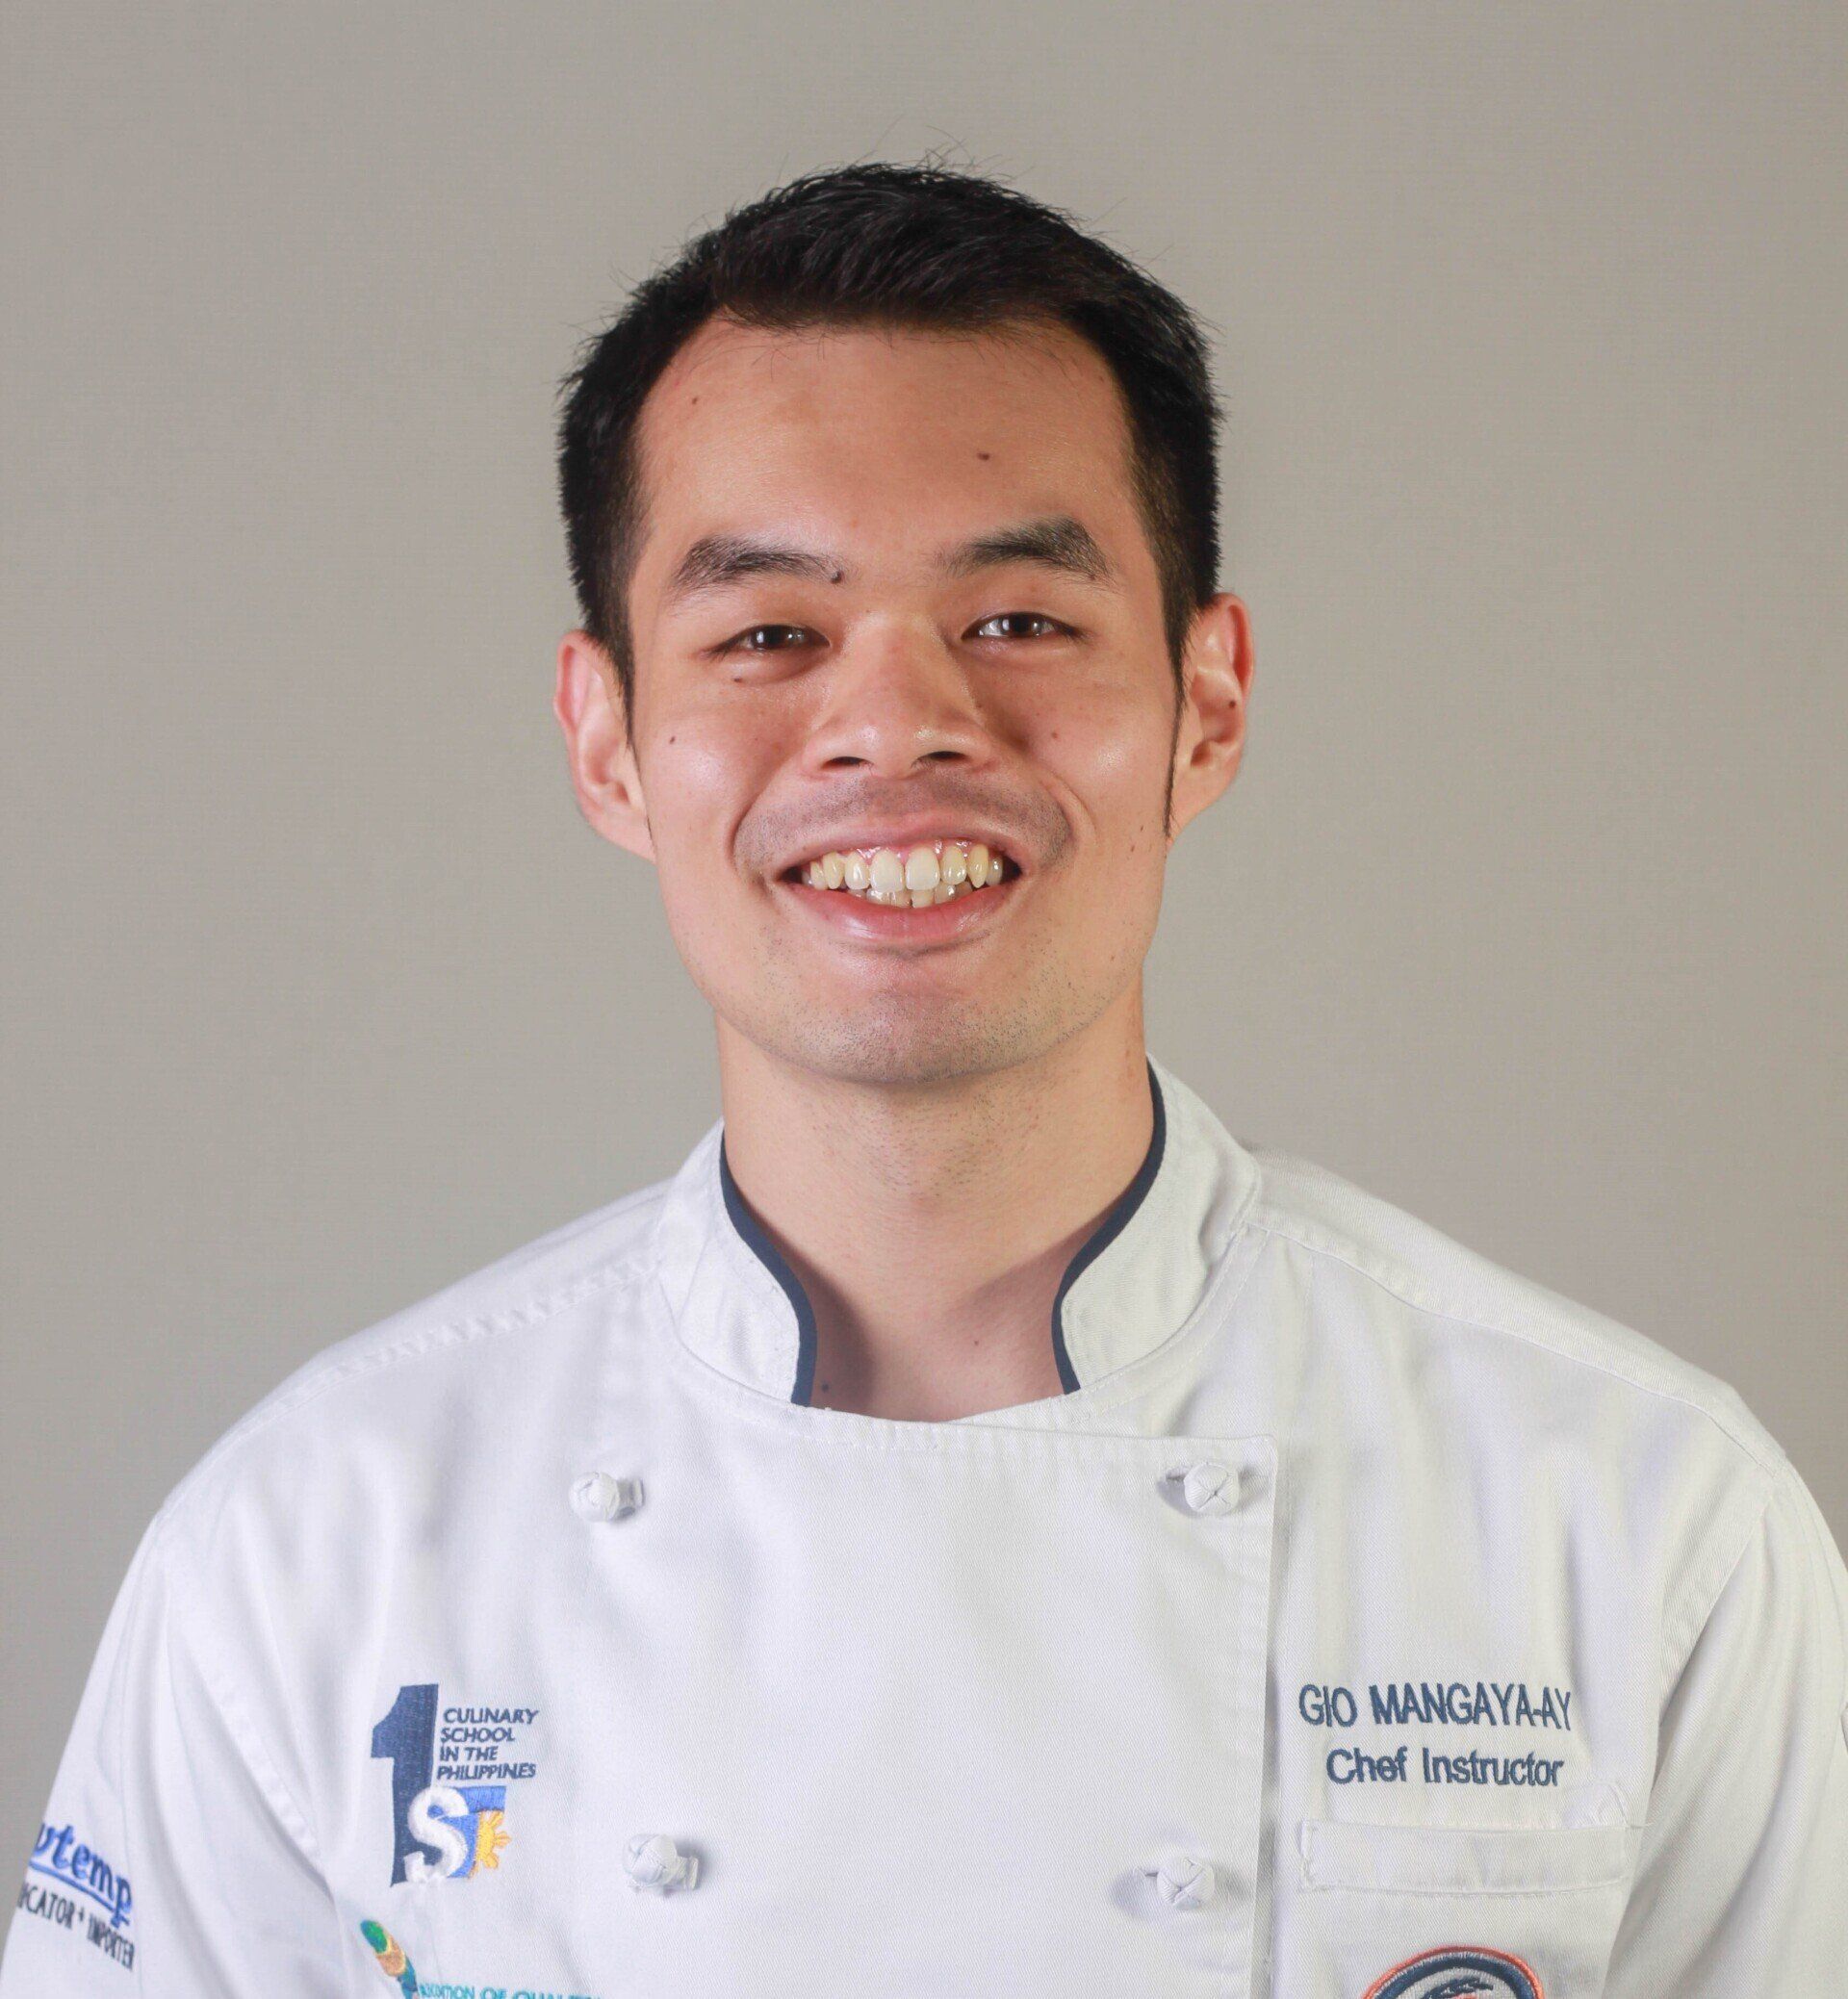 Chef Gio Ray Mangaya-ay, one of the 'Global Academy' instructor